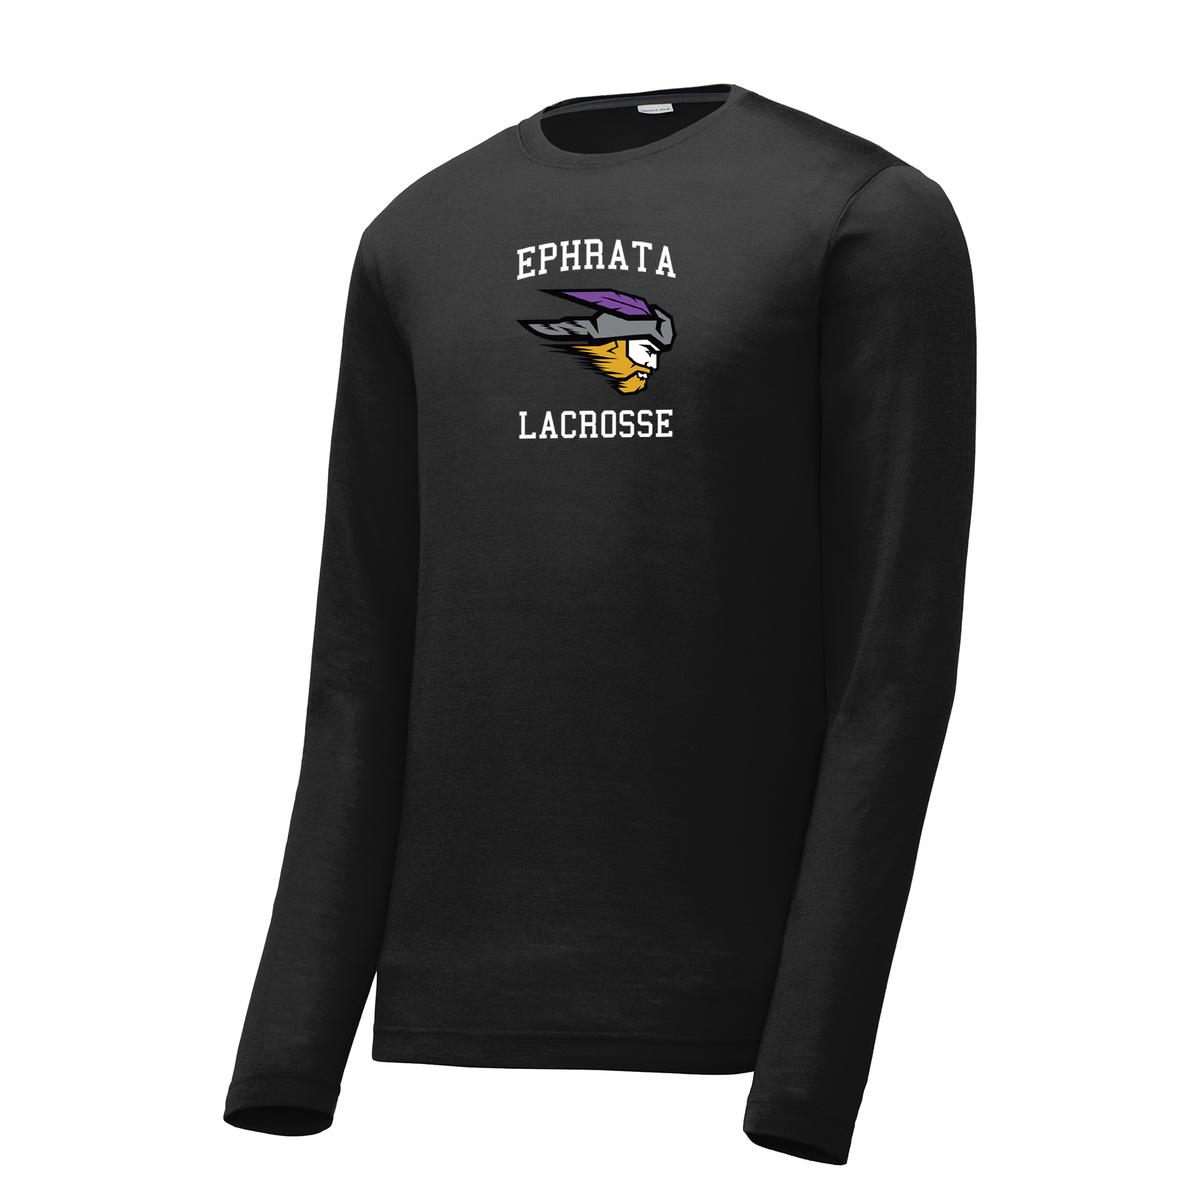 Ephrata Lacrosse Long Sleeve CottonTouch Performance Shirt